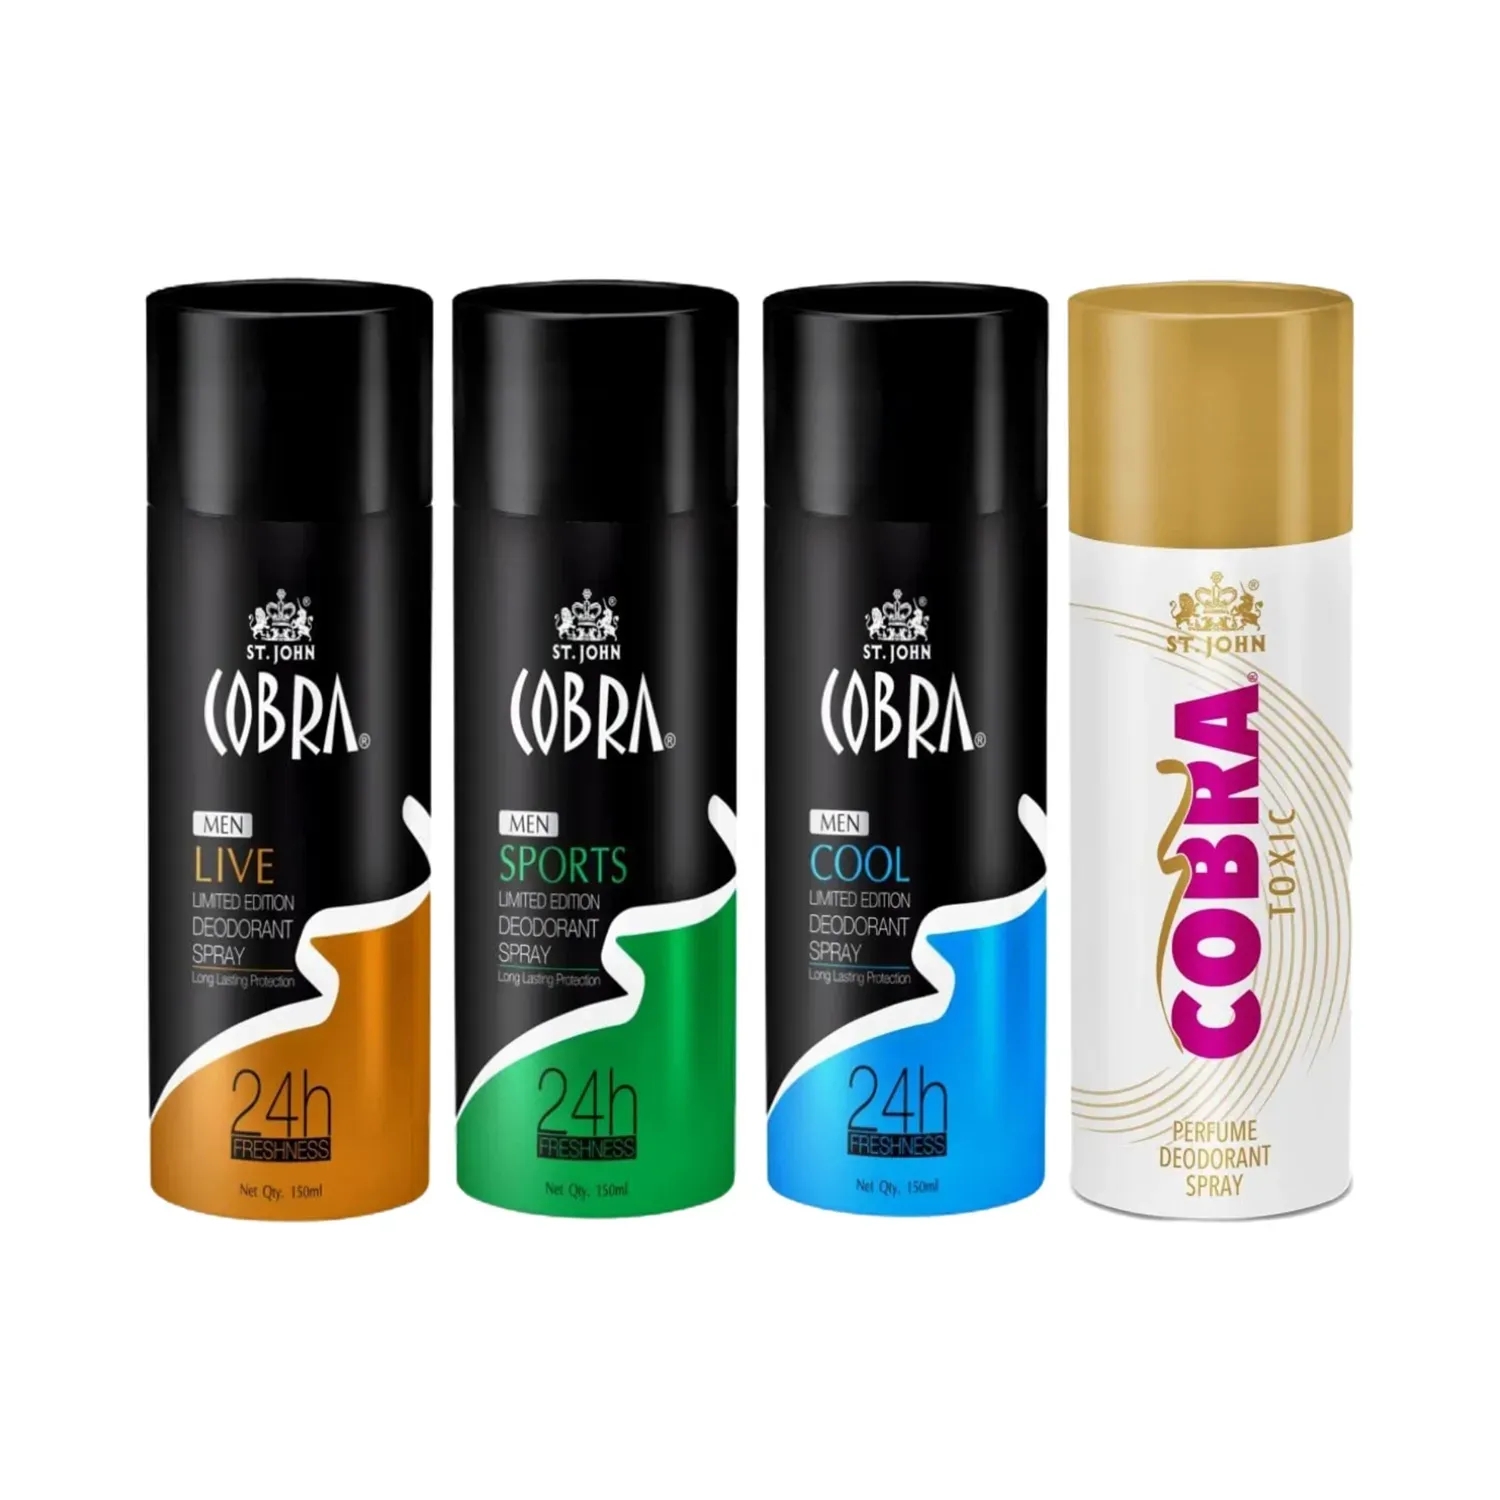 ST.JOHN | ST.JOHN Cobra Live, Cool, Sports & Toxic Deodorant Spray (4 Pcs)